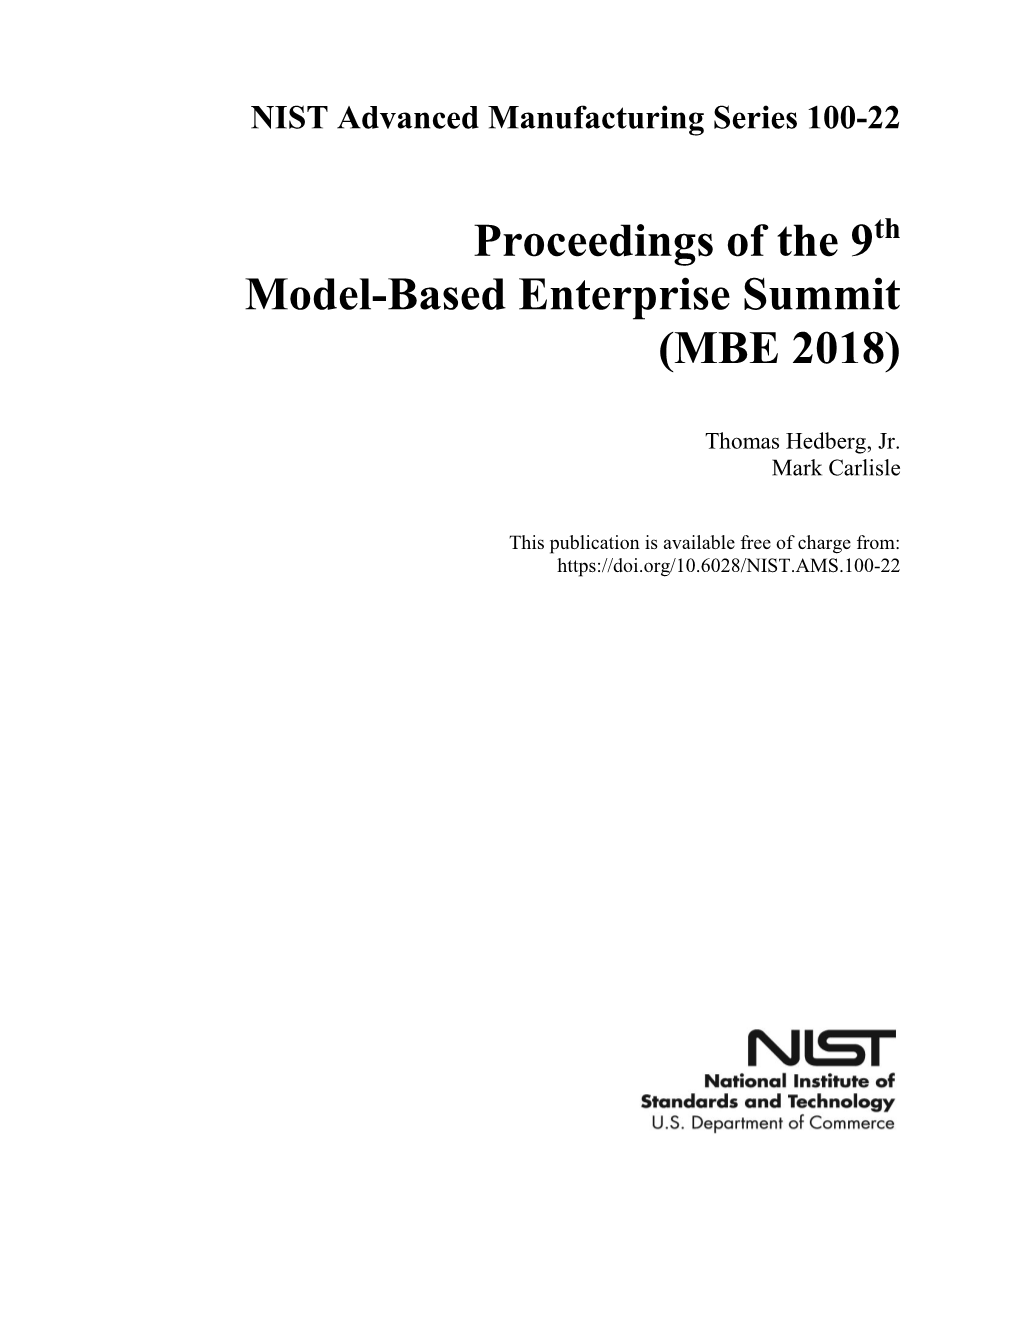 Proceedings of the 9Th Model-Based Enterprise Summit (MBE 2018)